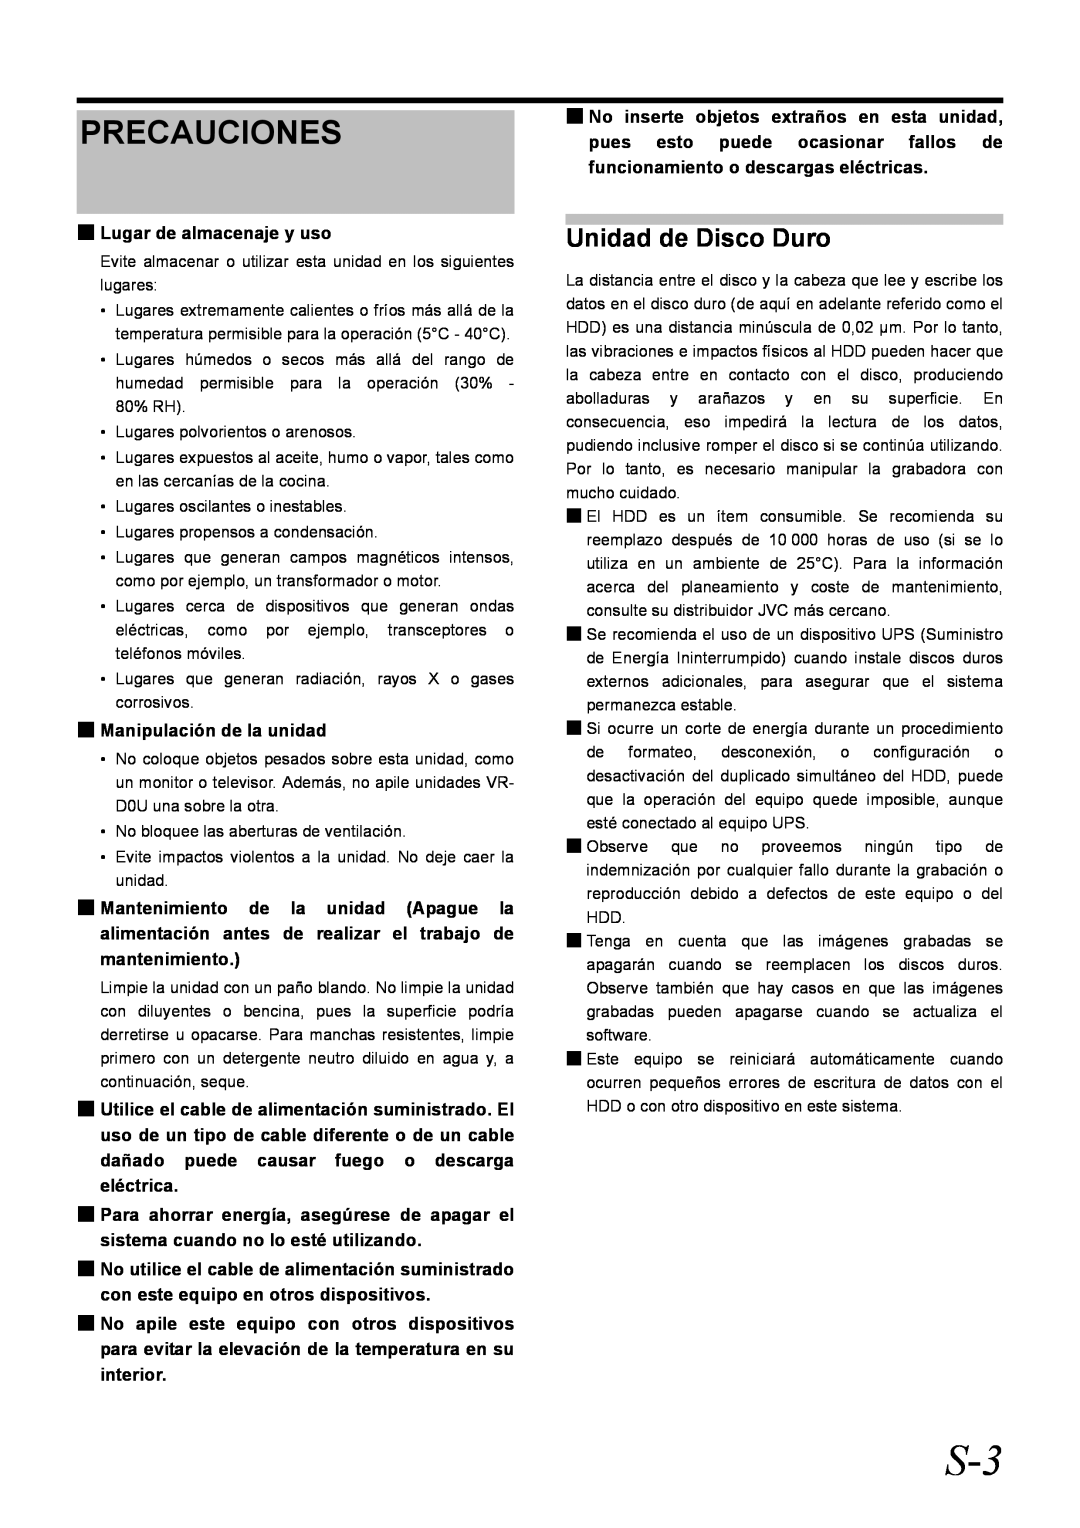 JVC VR-D0U manual Precauciones, Unidad de Disco Duro 